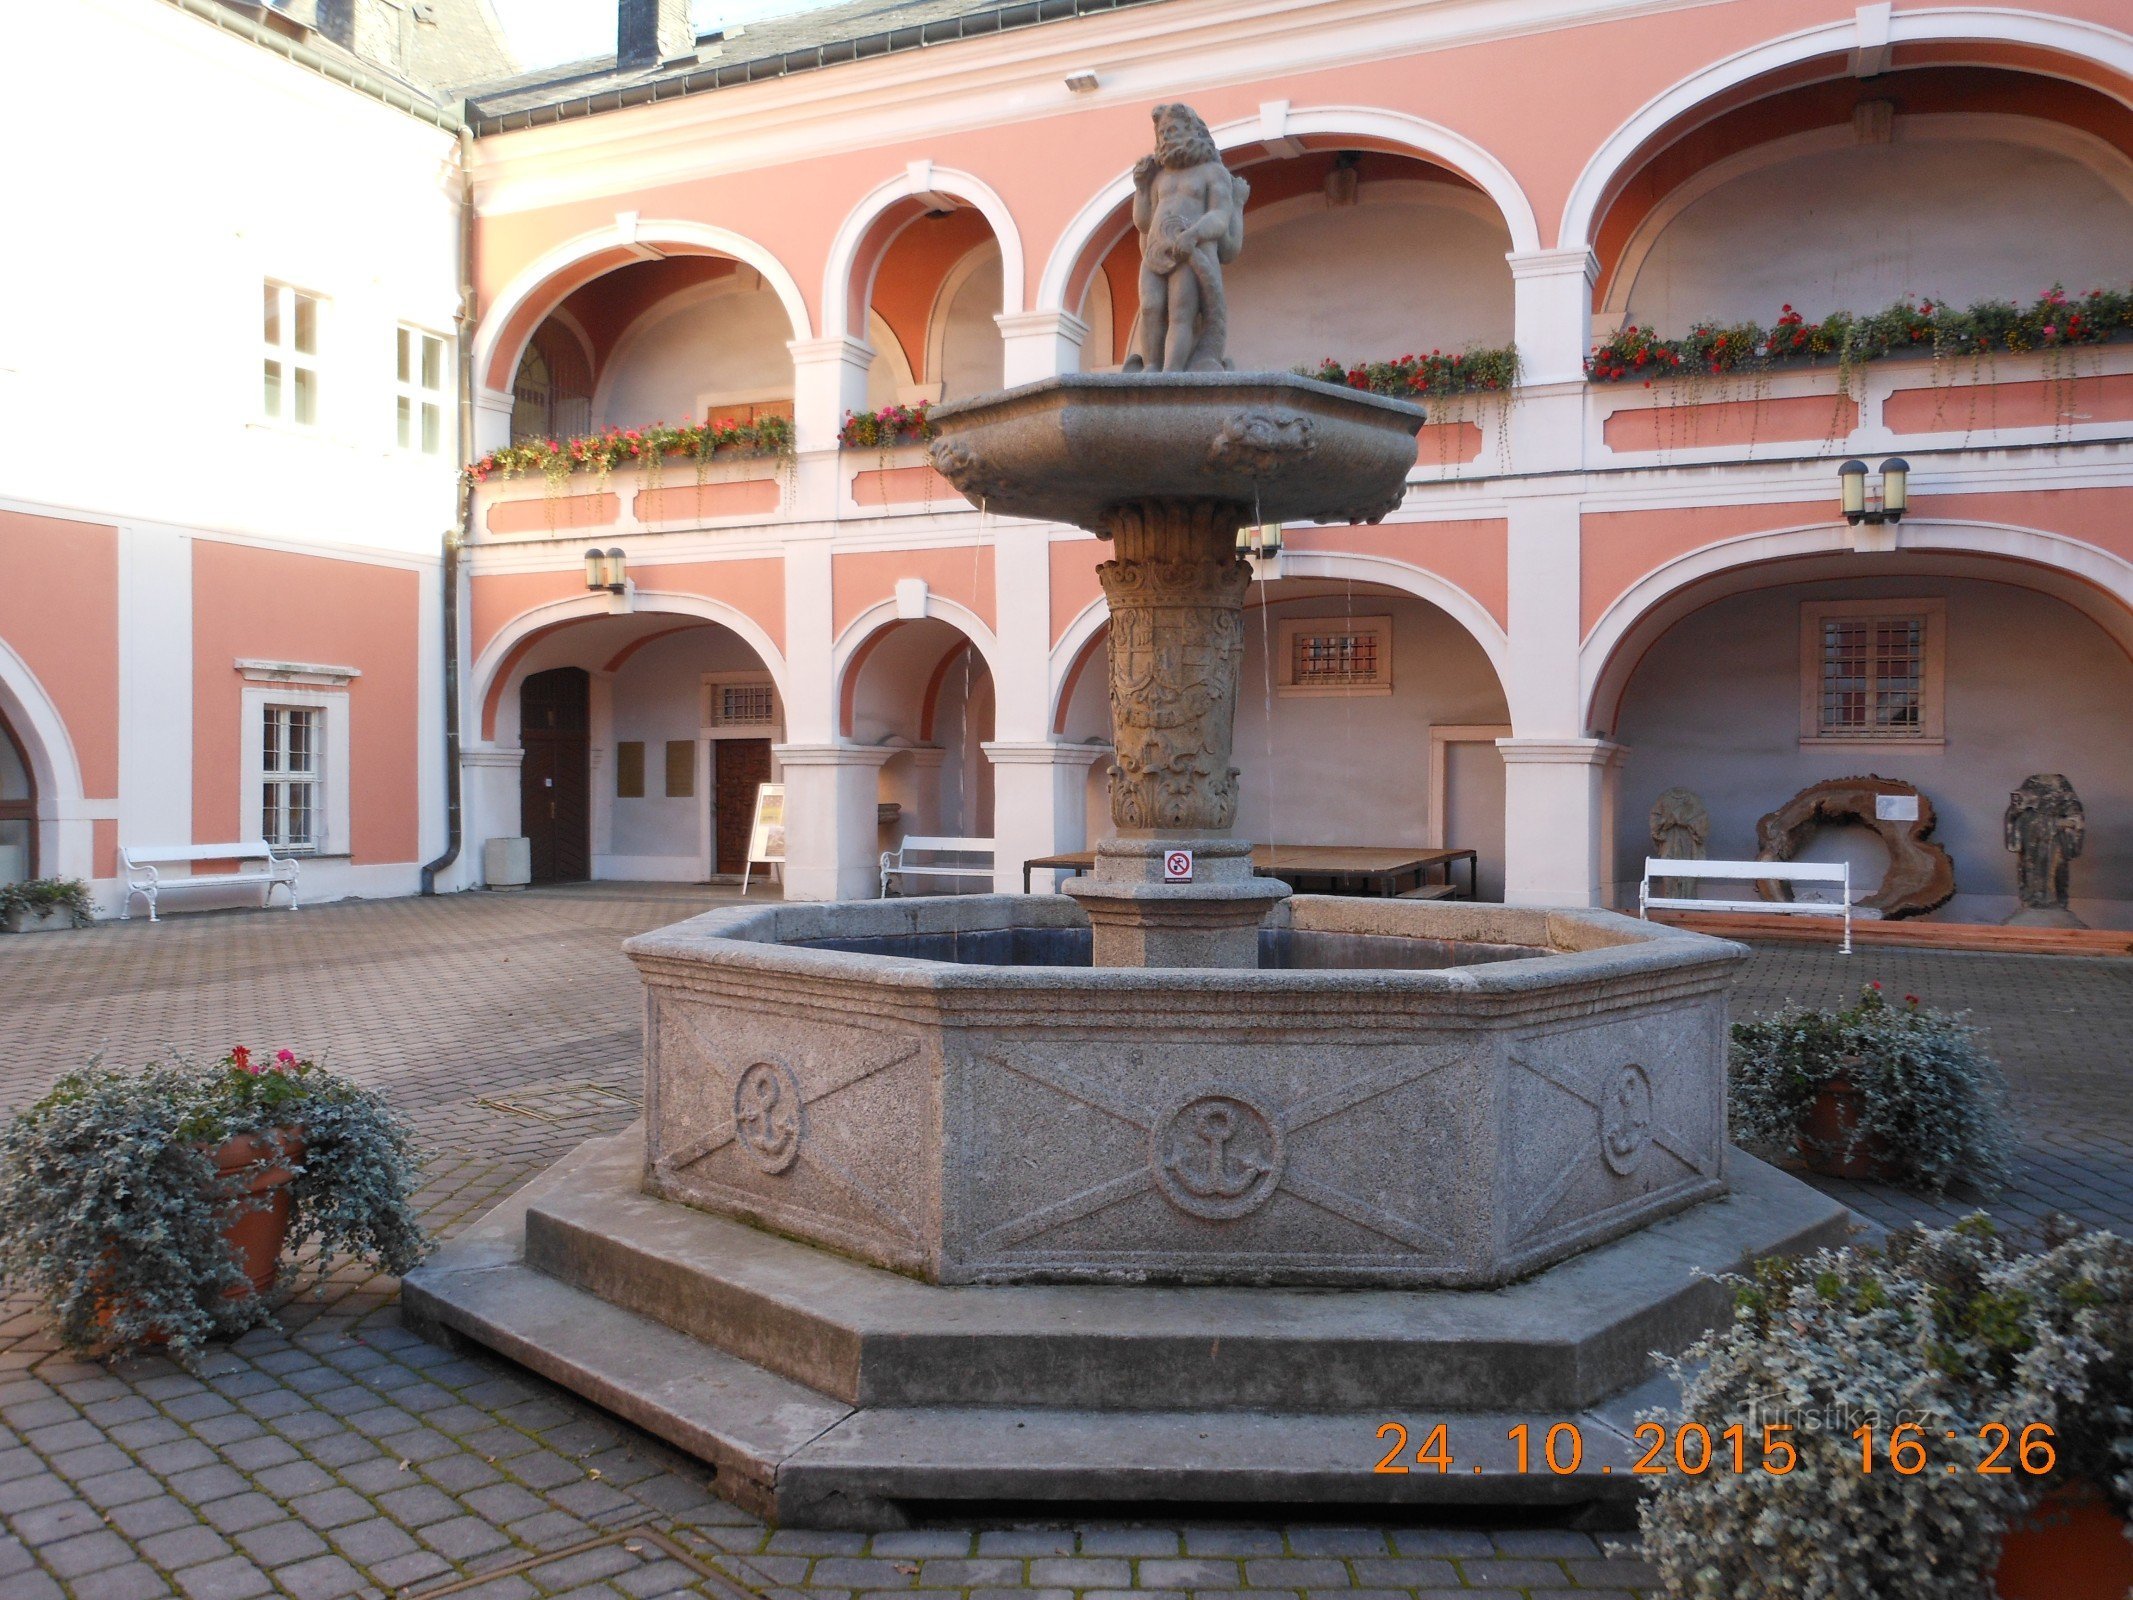 The fountain at the Sokolovsky Castle